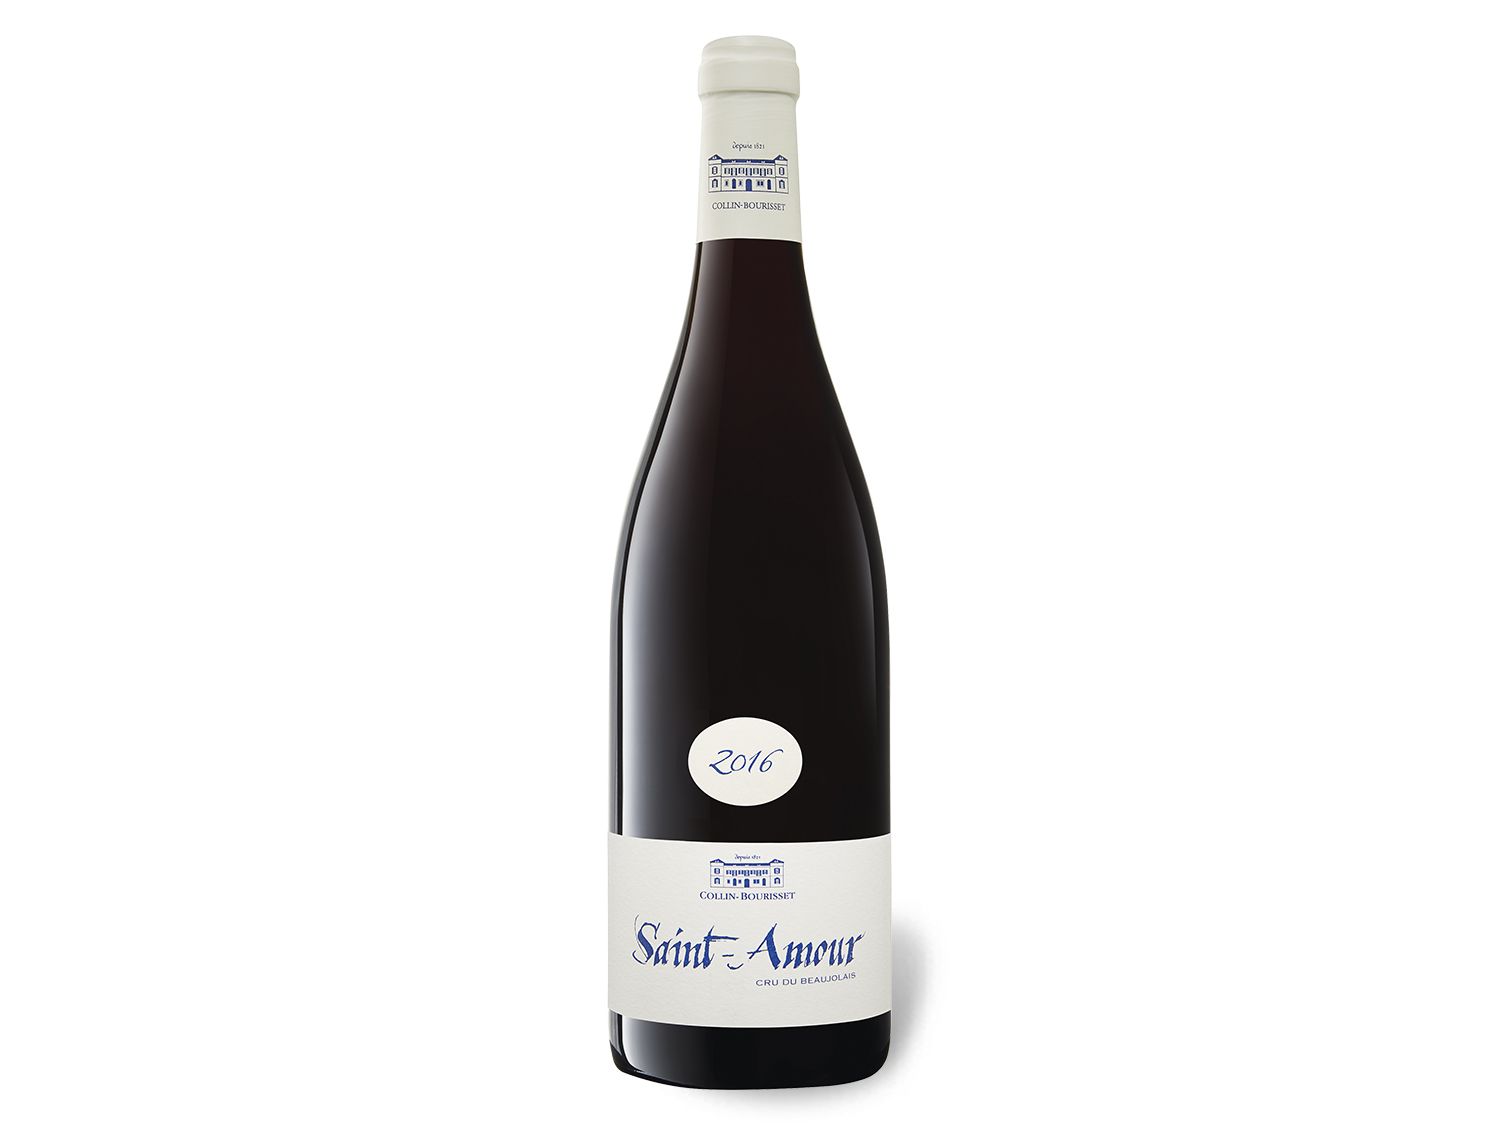 Collin Bourisset Saint-Amour AOP trocken, Rotwein 2018 Wein & Spirituosen Lidl DE